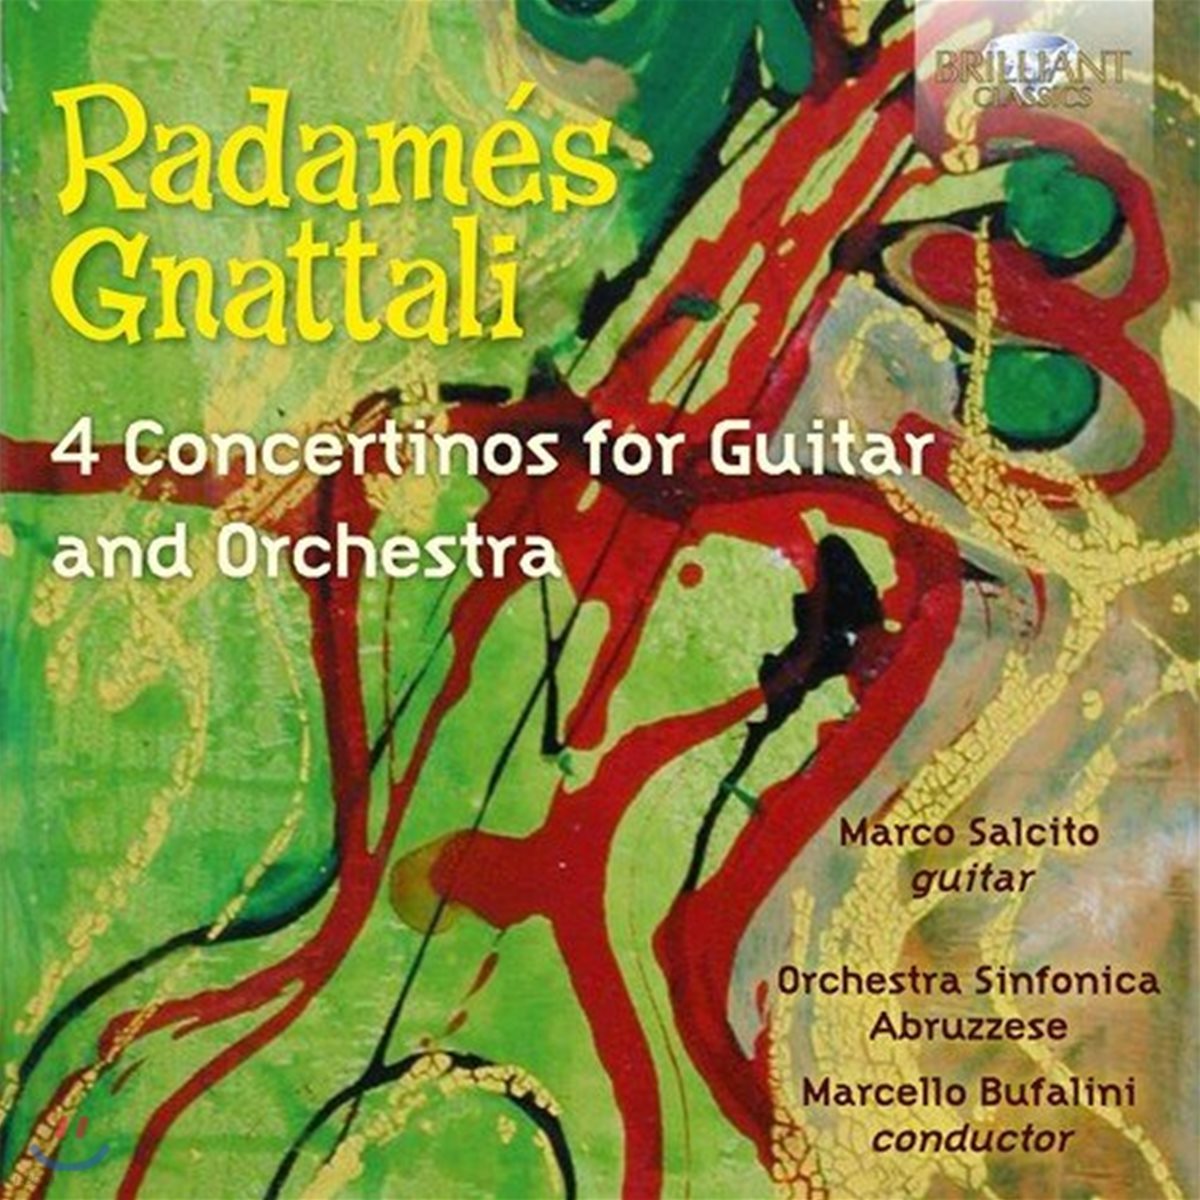 Marco Salcito 하다메스 그나탈리: 기타와 오케스트라를 위한 네 개의 콘체르티노 - 마르코 살치토, 아브루쩨제 오케스트라, 마르첼로 부팔리니 (Radames Gnattali: 4 Concertinos for Guitar and Orchestra)